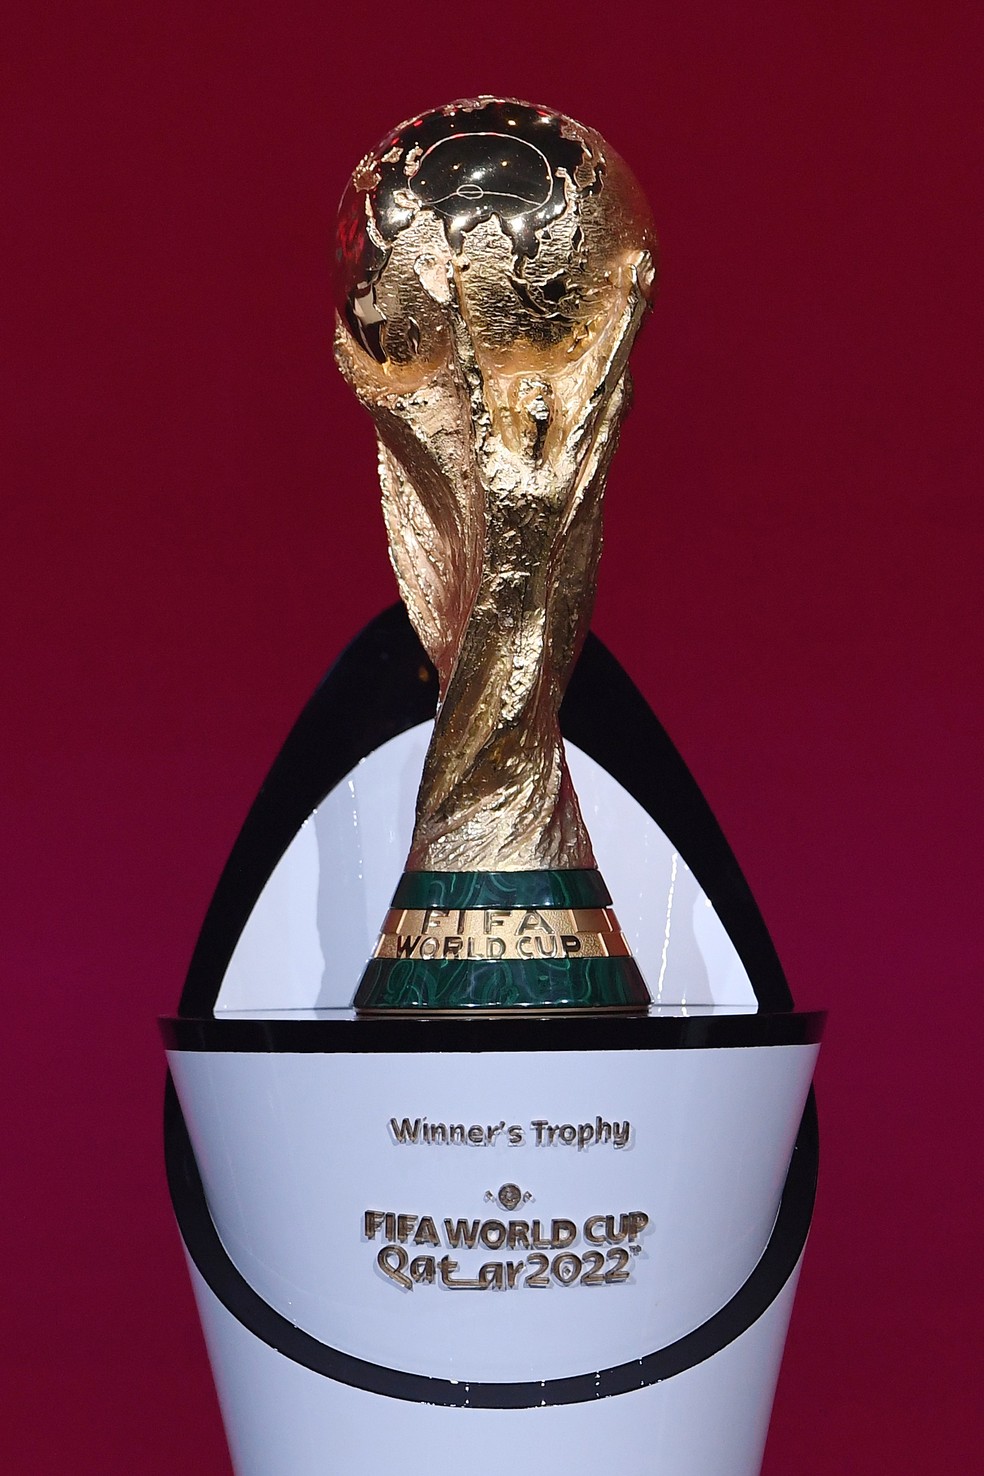 Ingressos Exclusivos para a Copa do Mundo FIFA Qatar 2022™ +